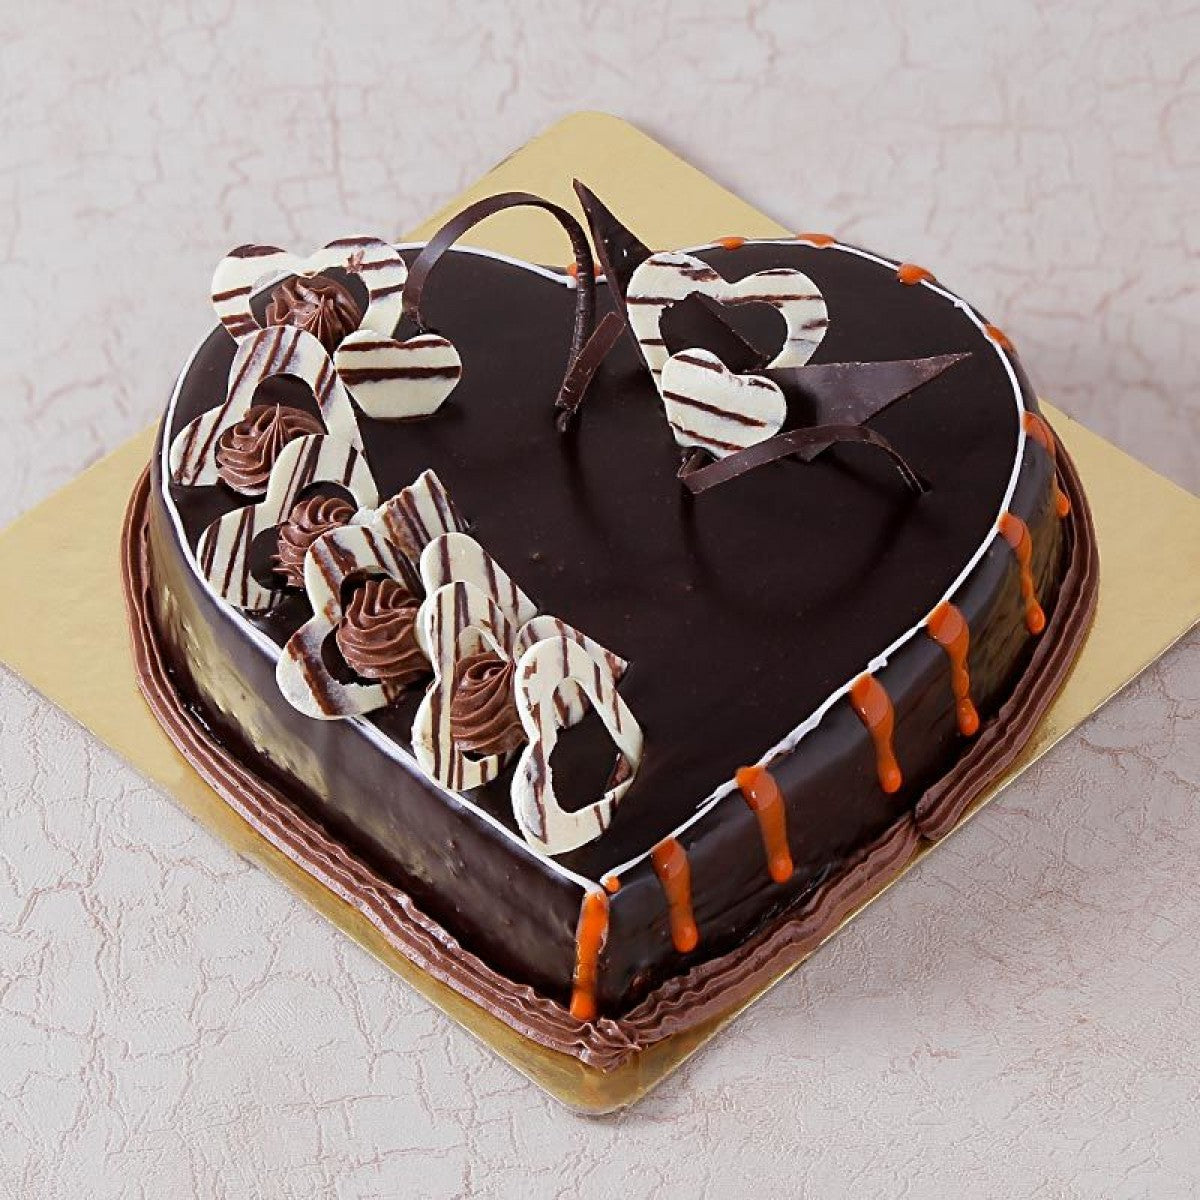 Chocolate truffle cake | Cute birthday cakes, Birthday cake decorating,  Beautiful birthday cakes